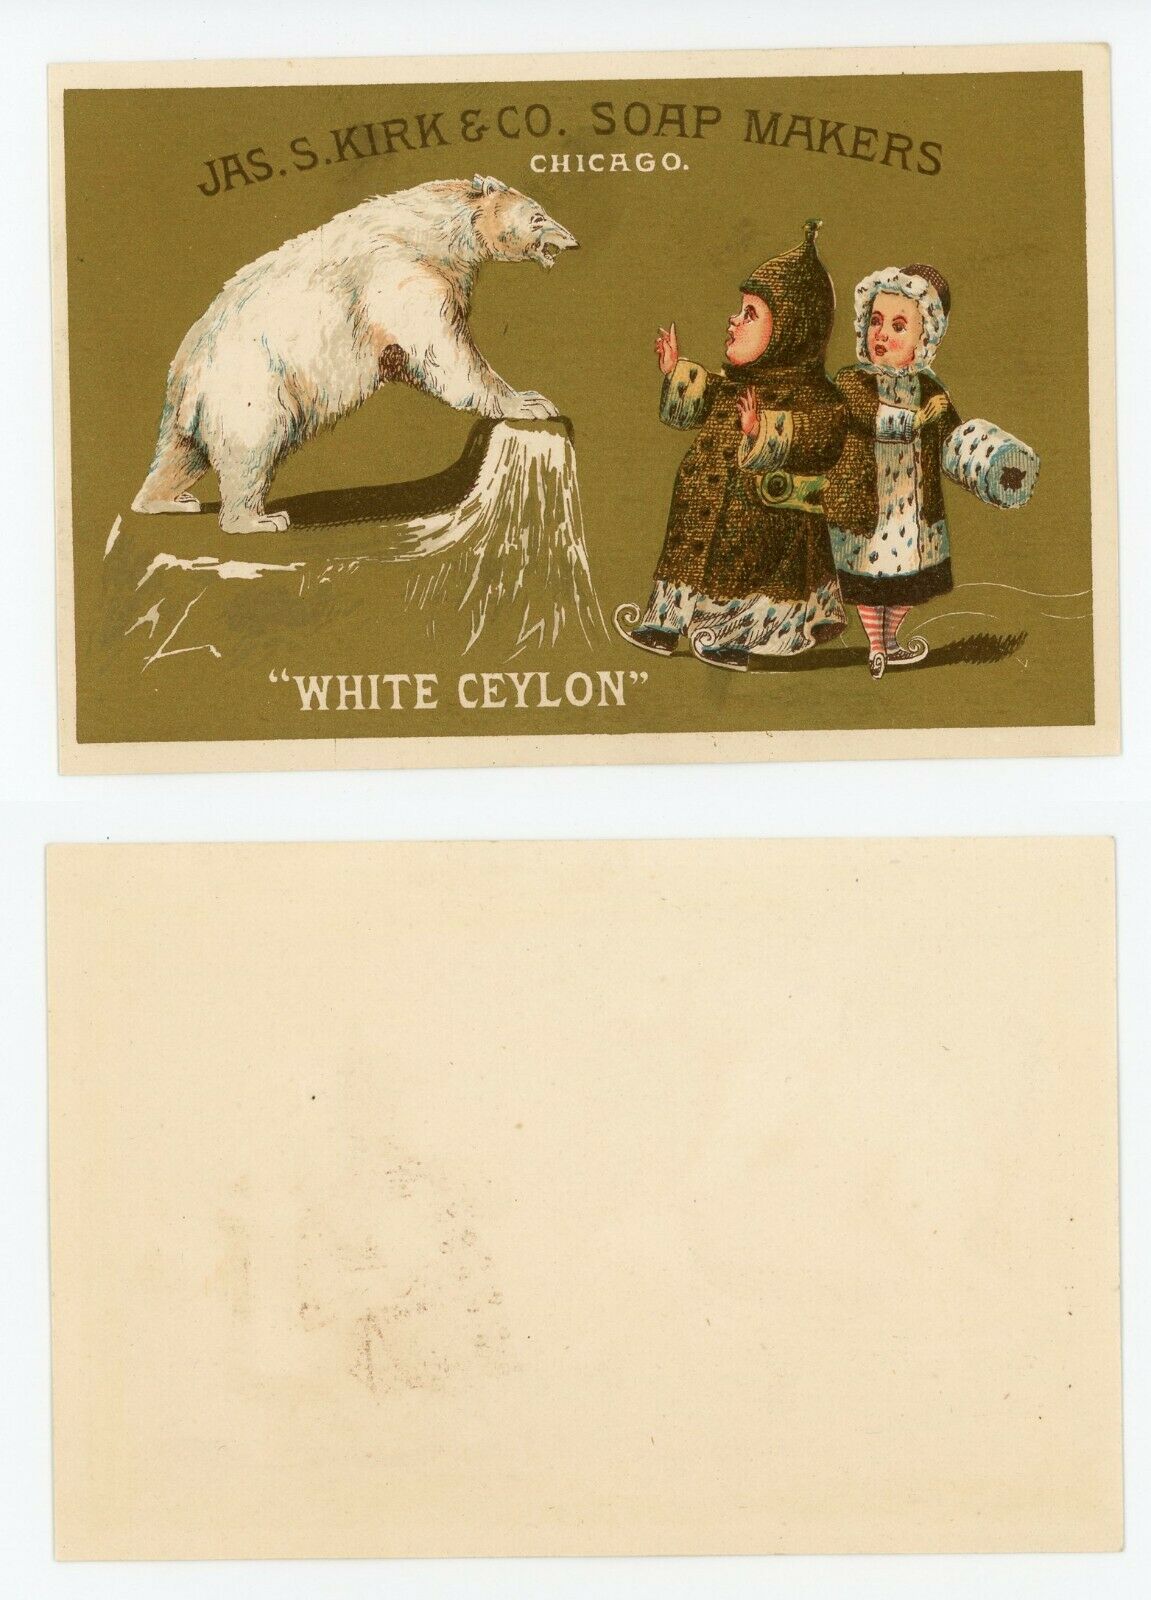 Trade Card - Jas S Kirk & Co Soap Makers, Chicago, Illinois "white Ceylon"